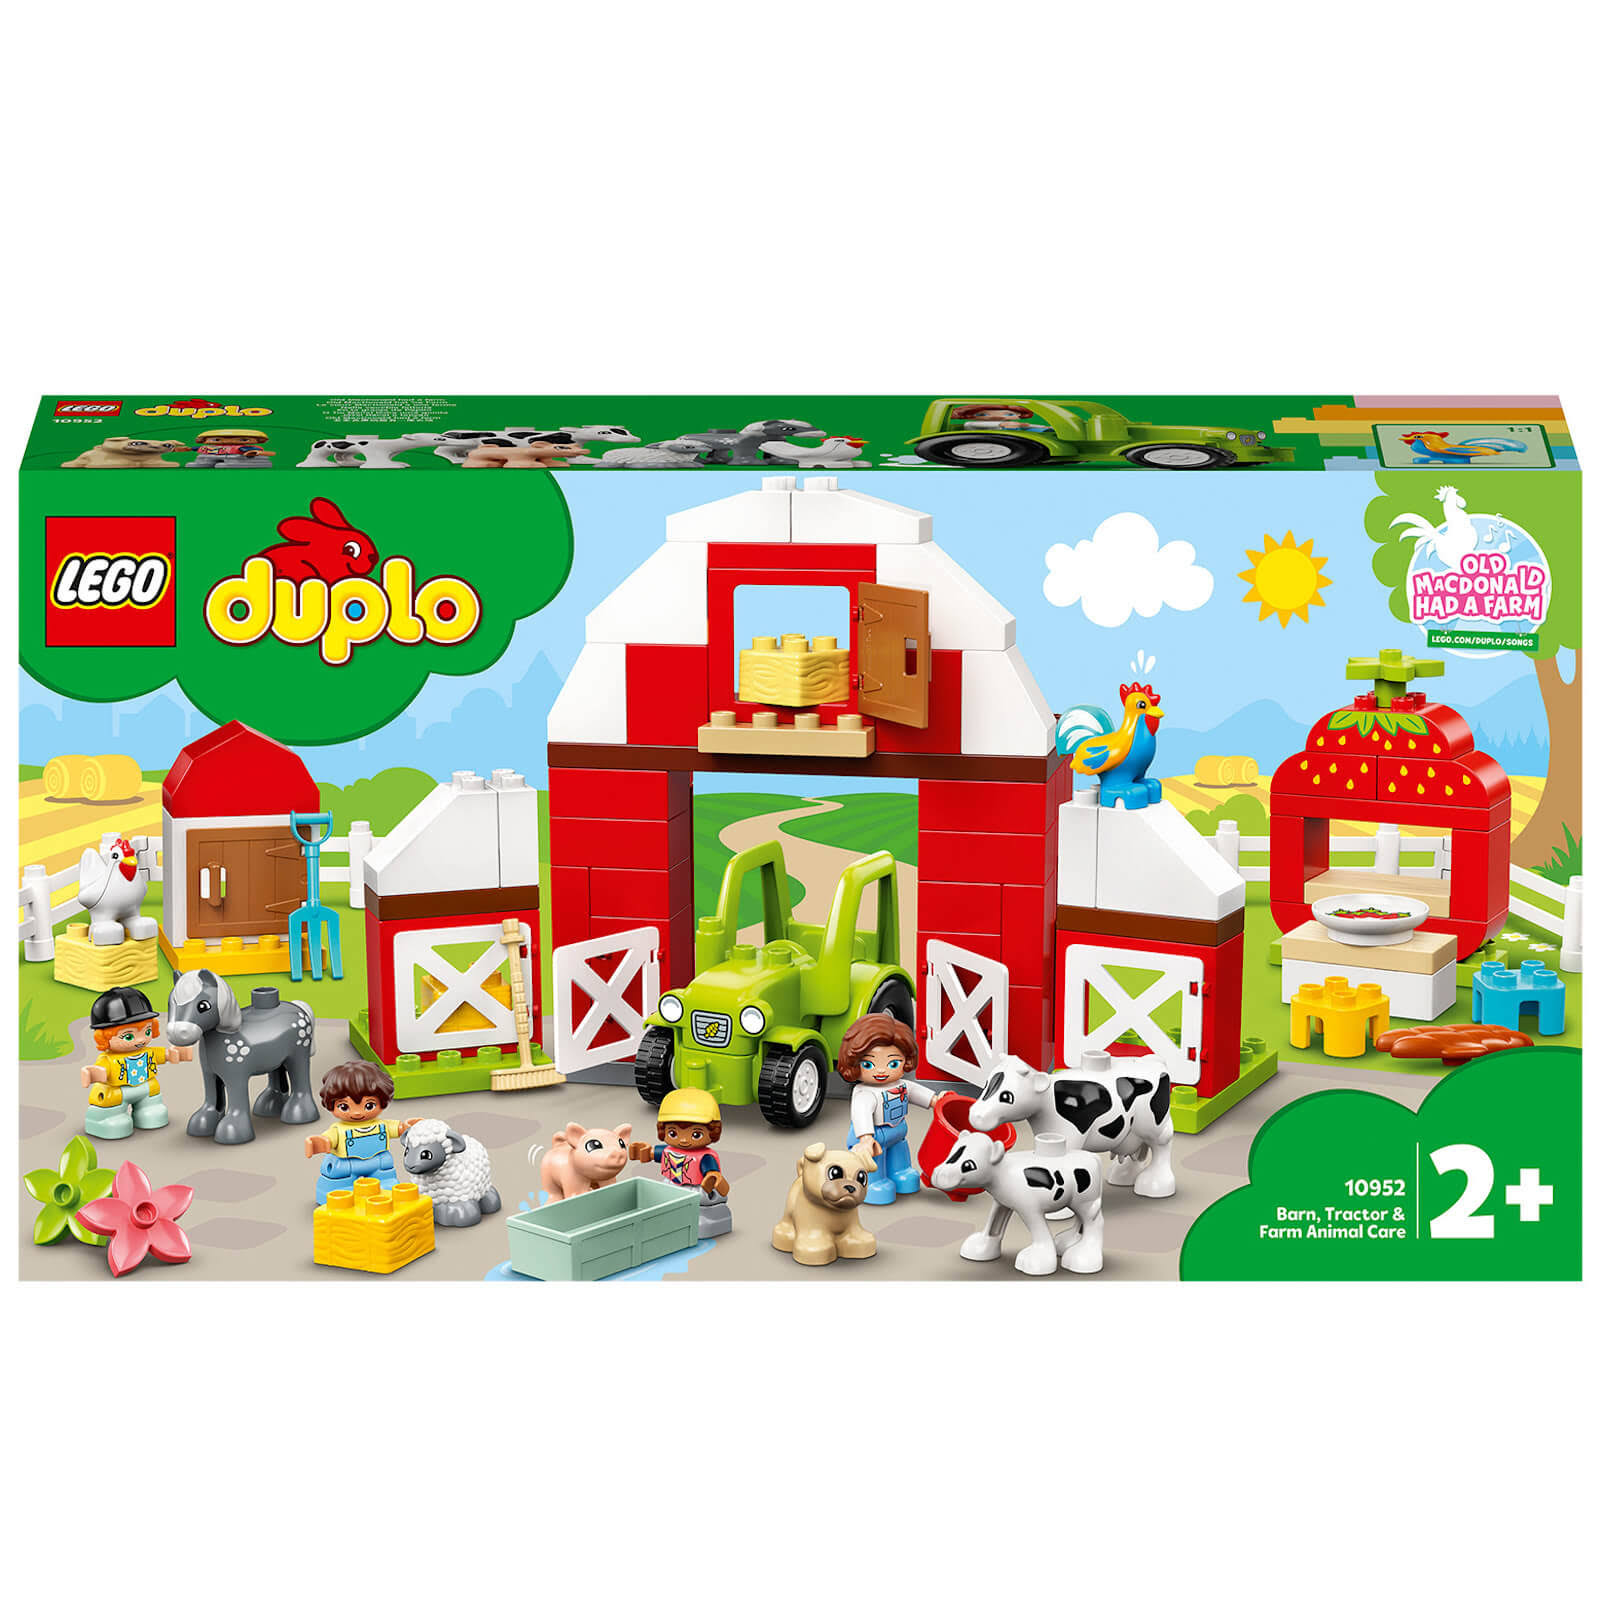 LEGO DUPLO 10952 Town Barn, Tractor & Farm Animal Care